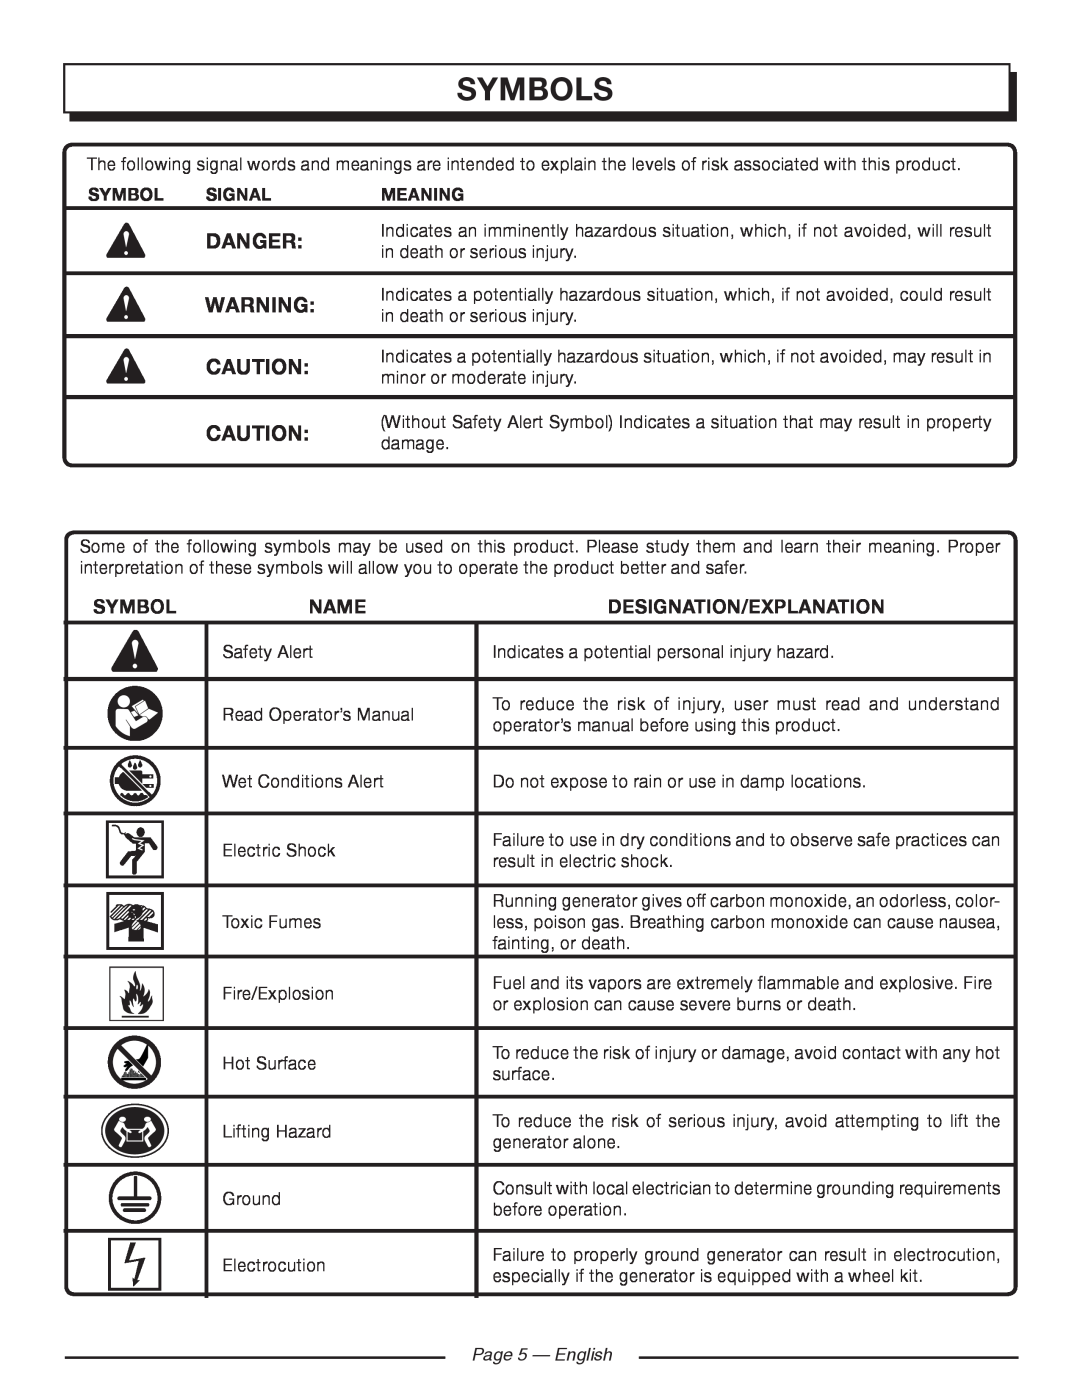 Homelite HGCA1400 manuel dutilisation Symbols, Danger, Name, Designation/Explanation, Signal, Meaning, Page 5 - English 